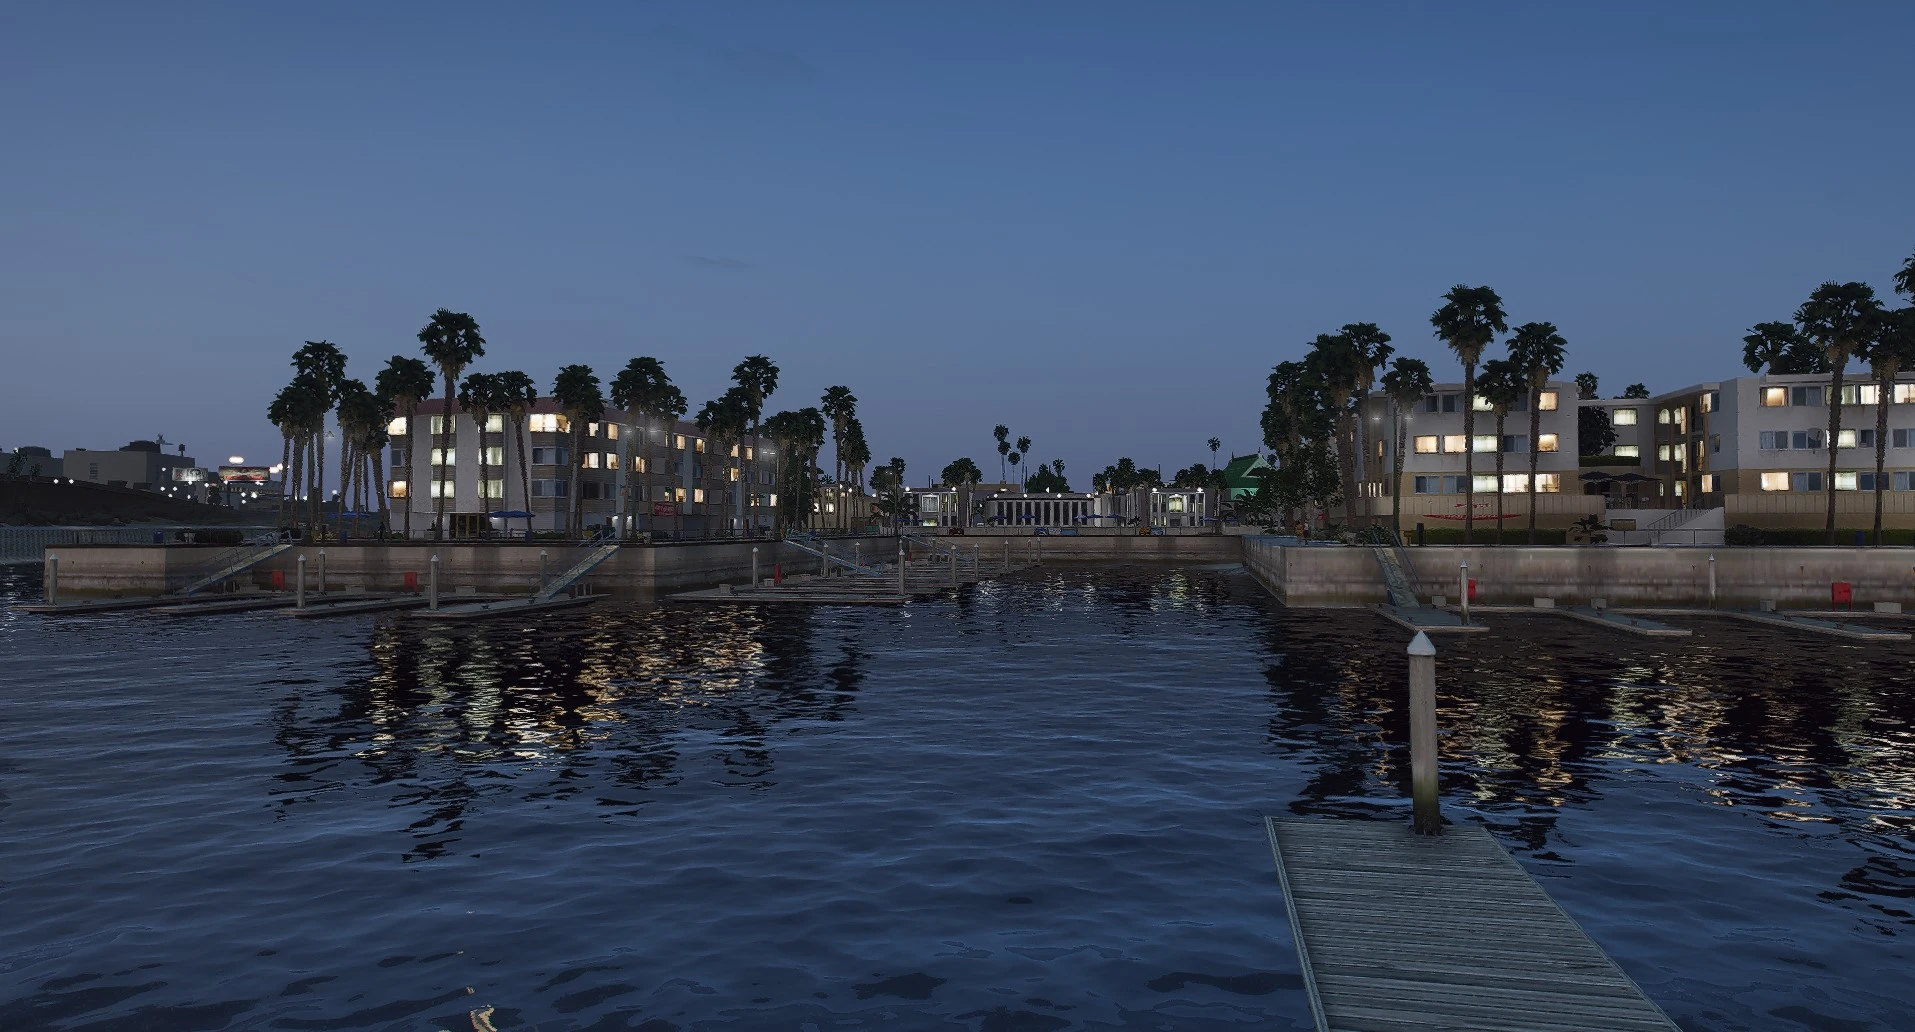 Mods at Grand Theft Auto 5 Nexus - Mods and Community